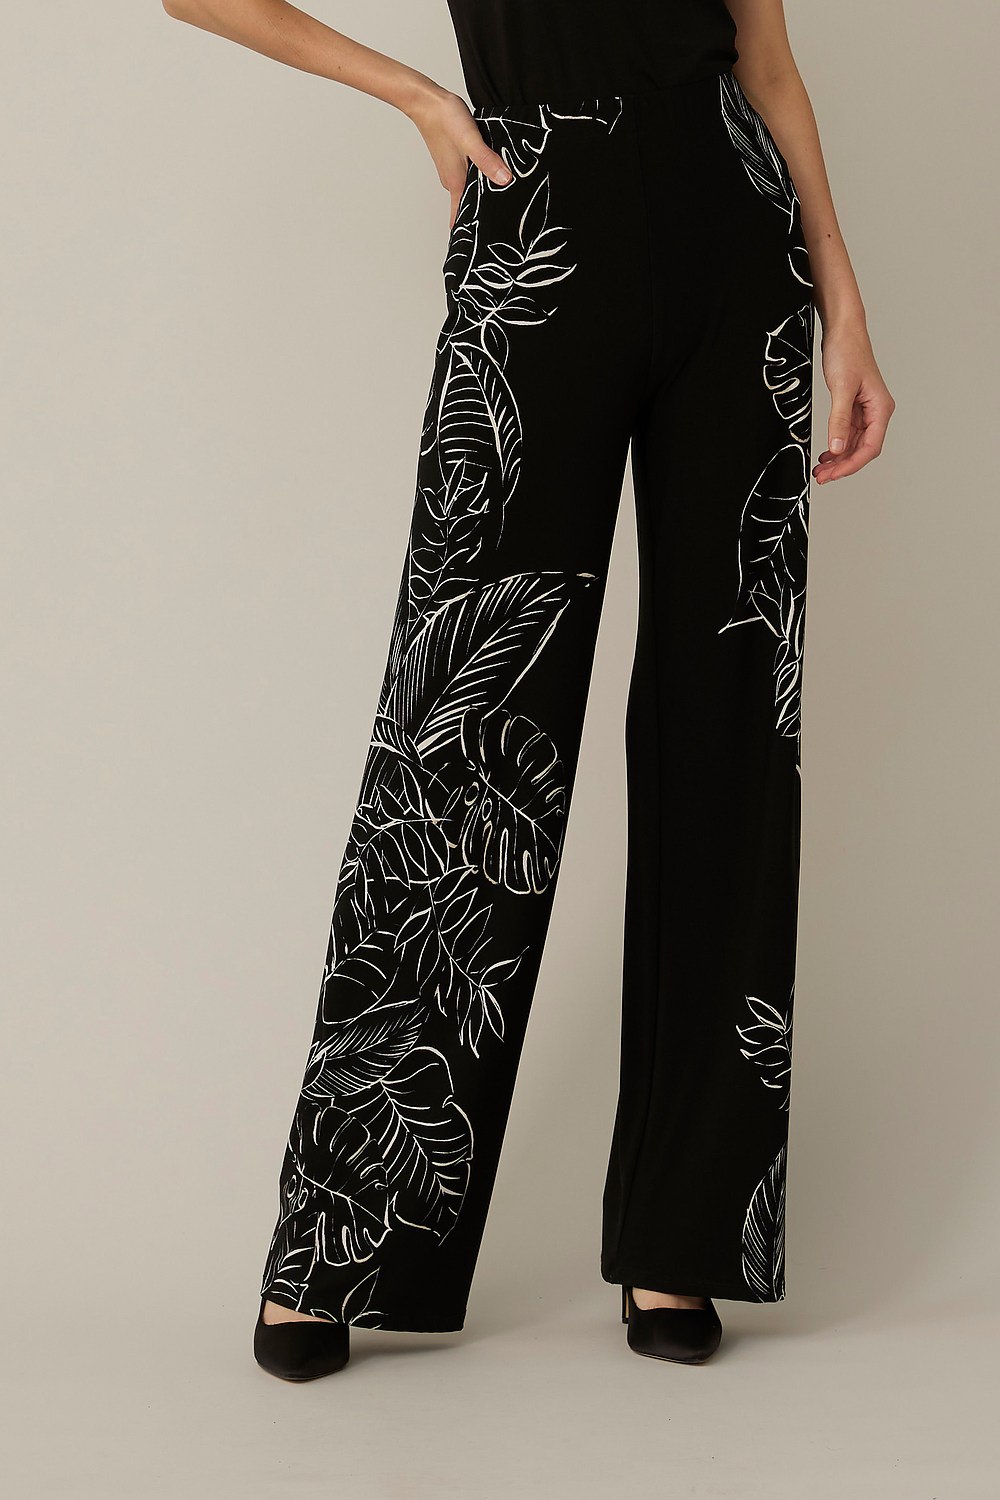 Joseph Ribkoff High-Rise Palm Pants Style 221321. Black/vanilla